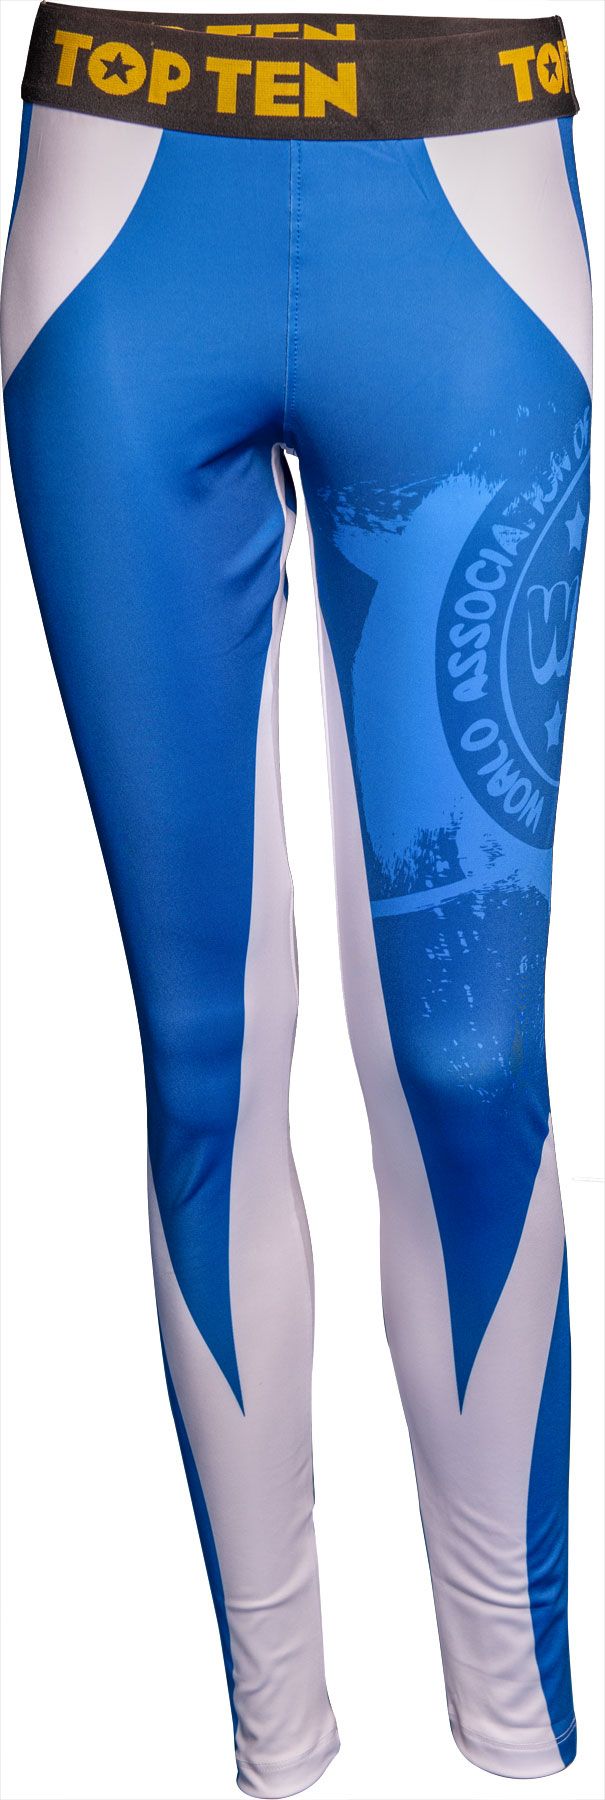 Top Ten workout leggings WAKO - blue